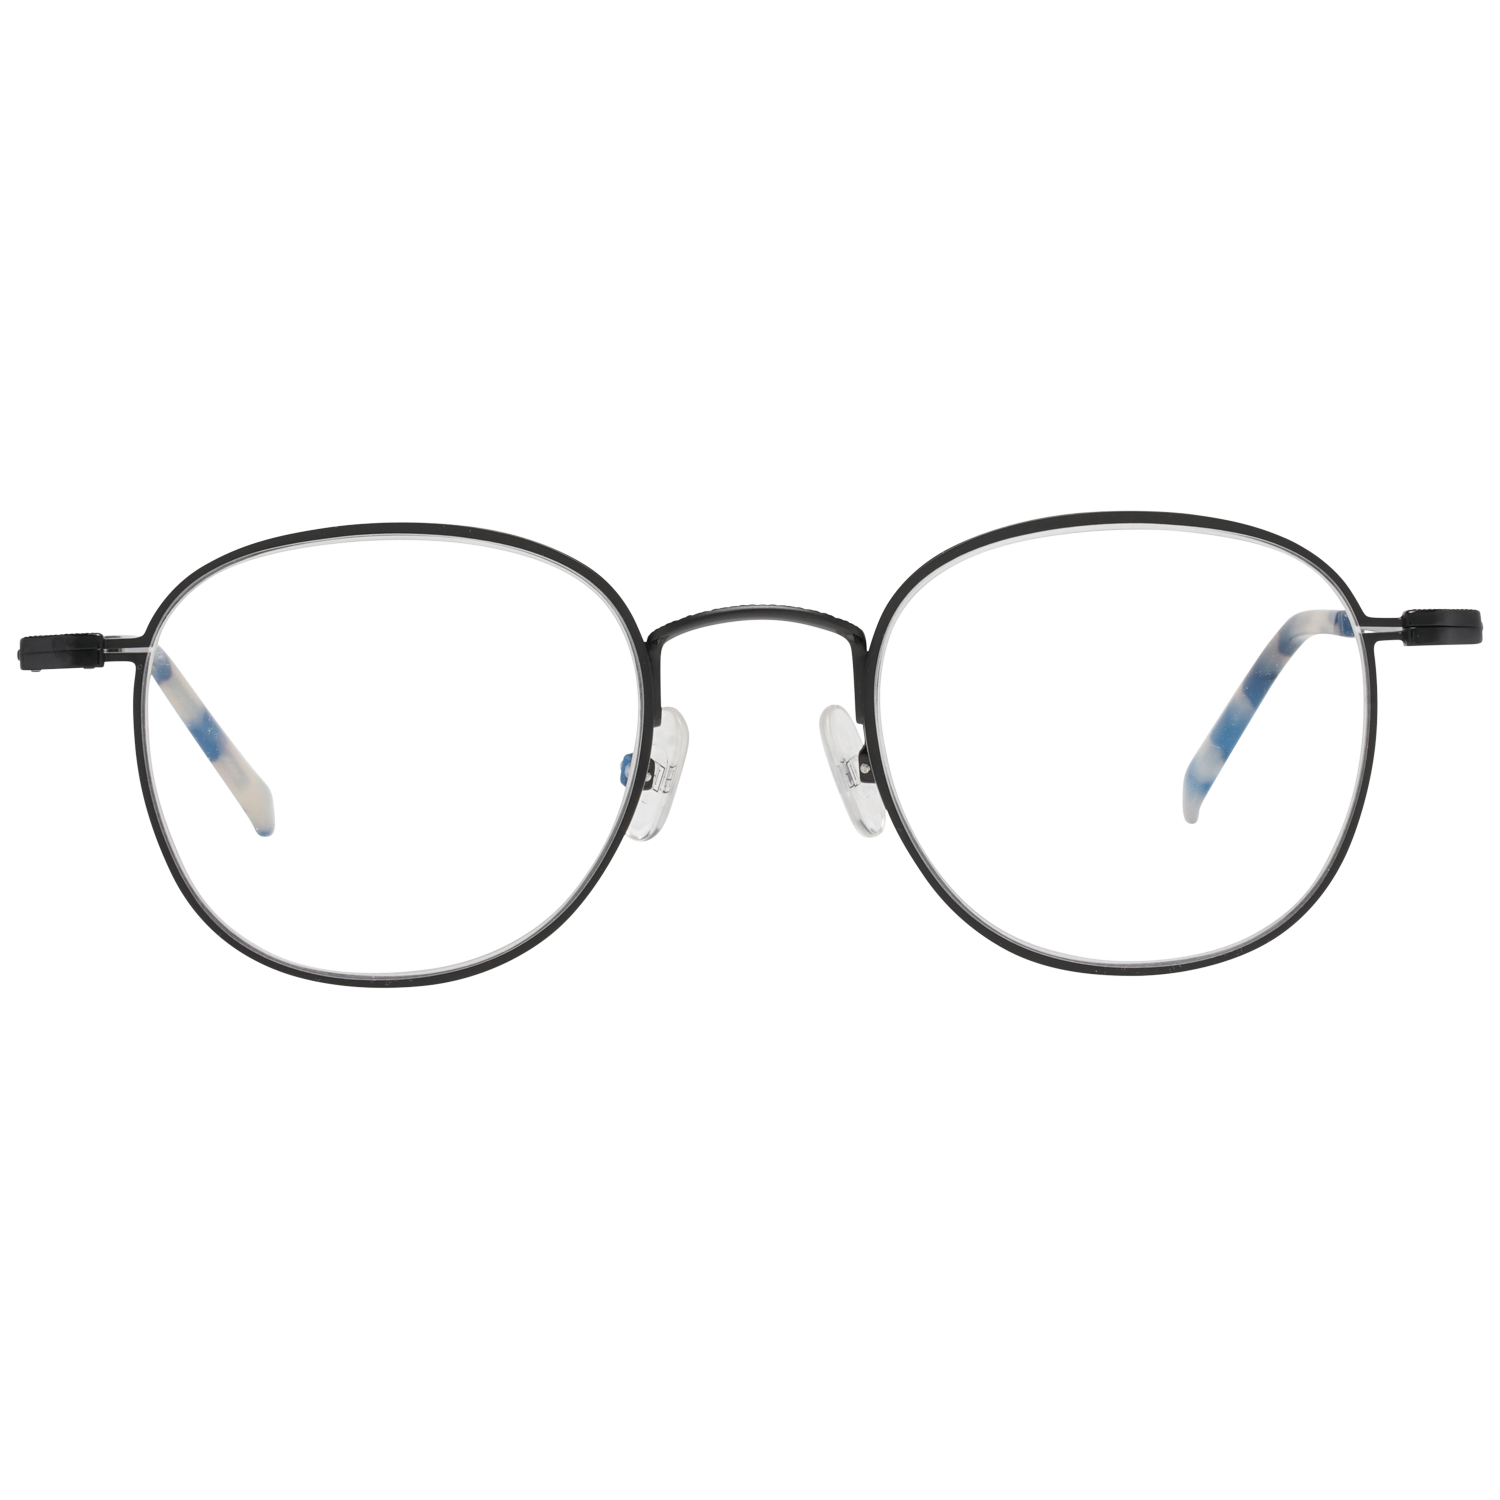 Hackett Frames Hackett Bespoke Glasses Optical Frame HEB242 002 48 Eyeglasses Eyewear UK USA Australia 